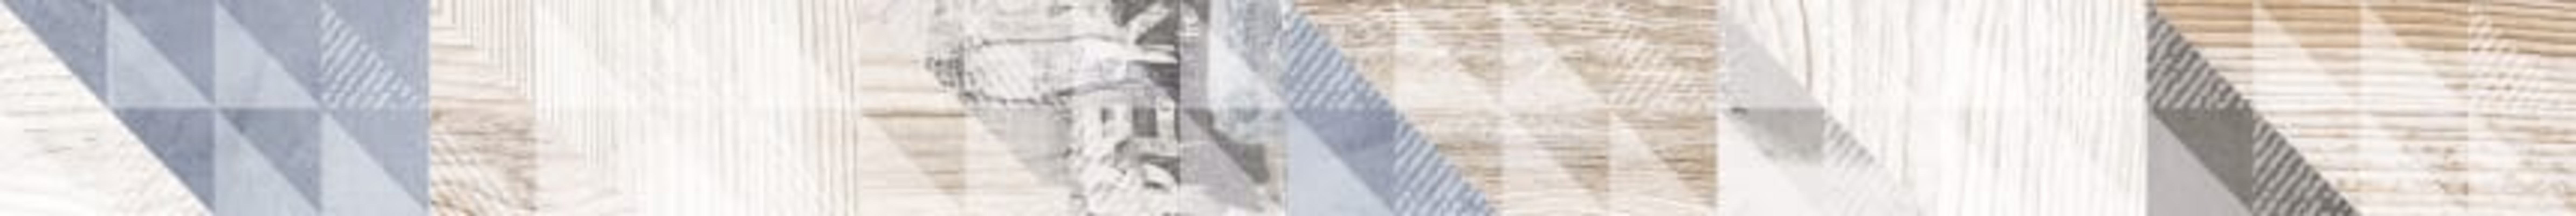 91041499 Декор плиточный настенный Вестанвинд 1506-0024-1001 5x60см 0.63 м² цвет серый STLM-0454650 LASSELSBERGER CERAMICS